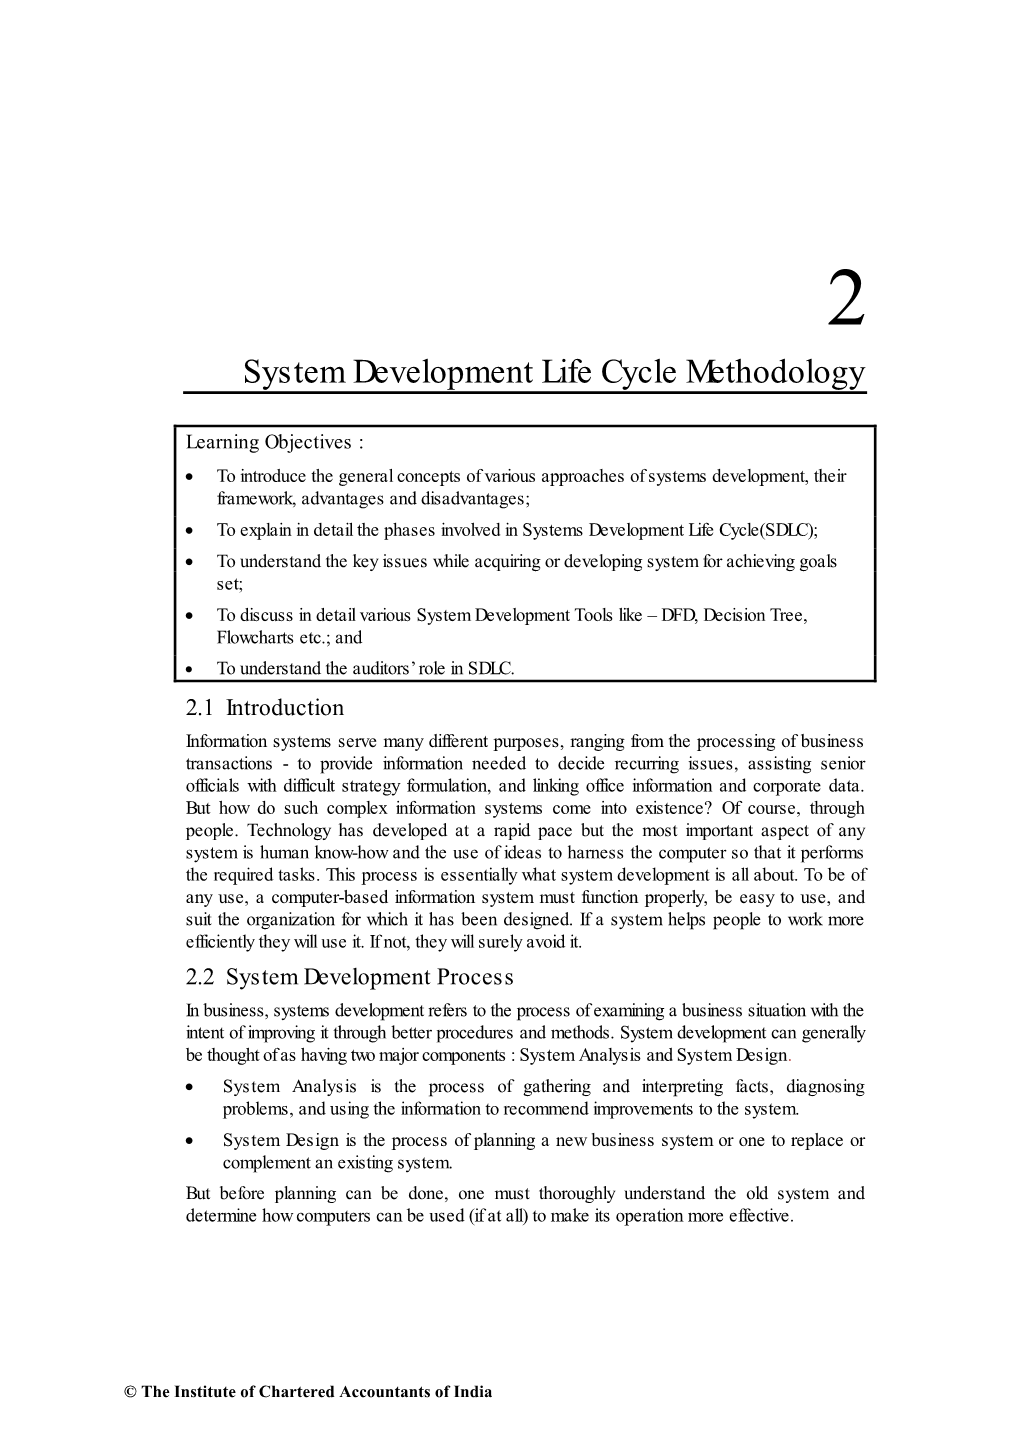 System Development Life Cycle Methodology